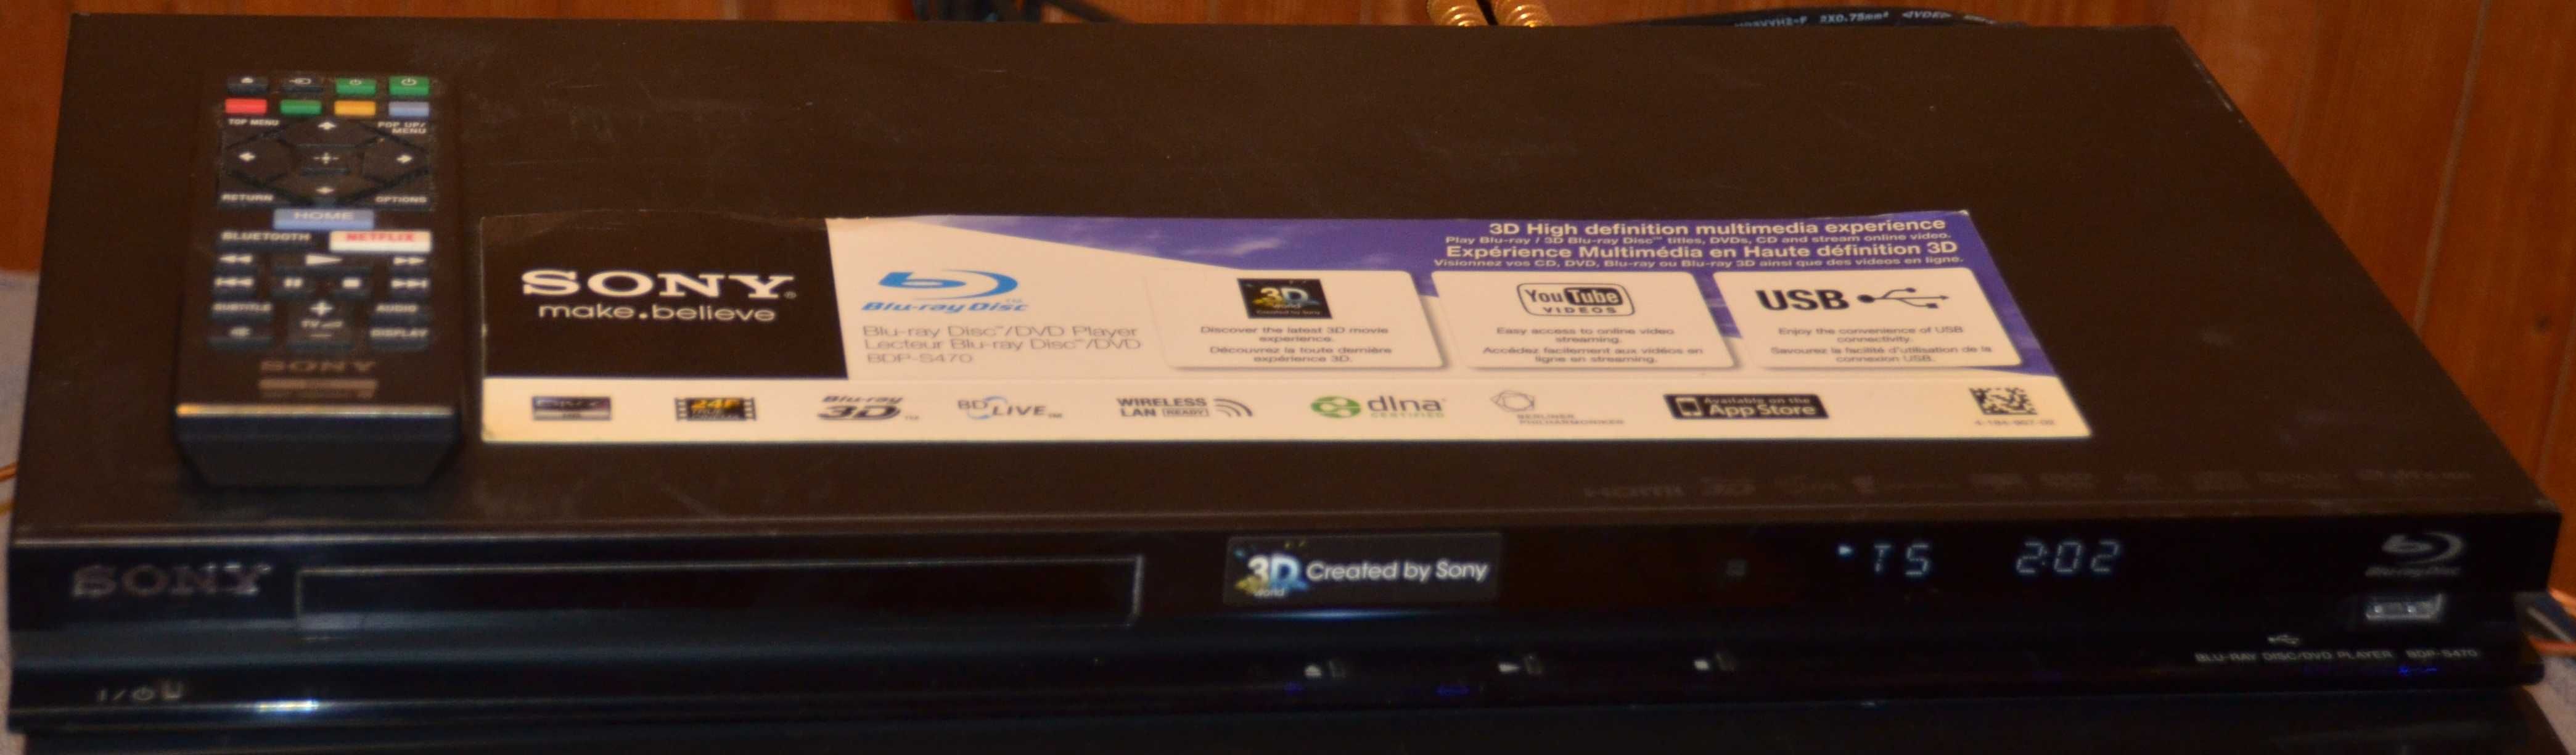 Odtwarzacz BluRay Sony BDP-S470 +Pilot 3D HDMI FHD DLNA